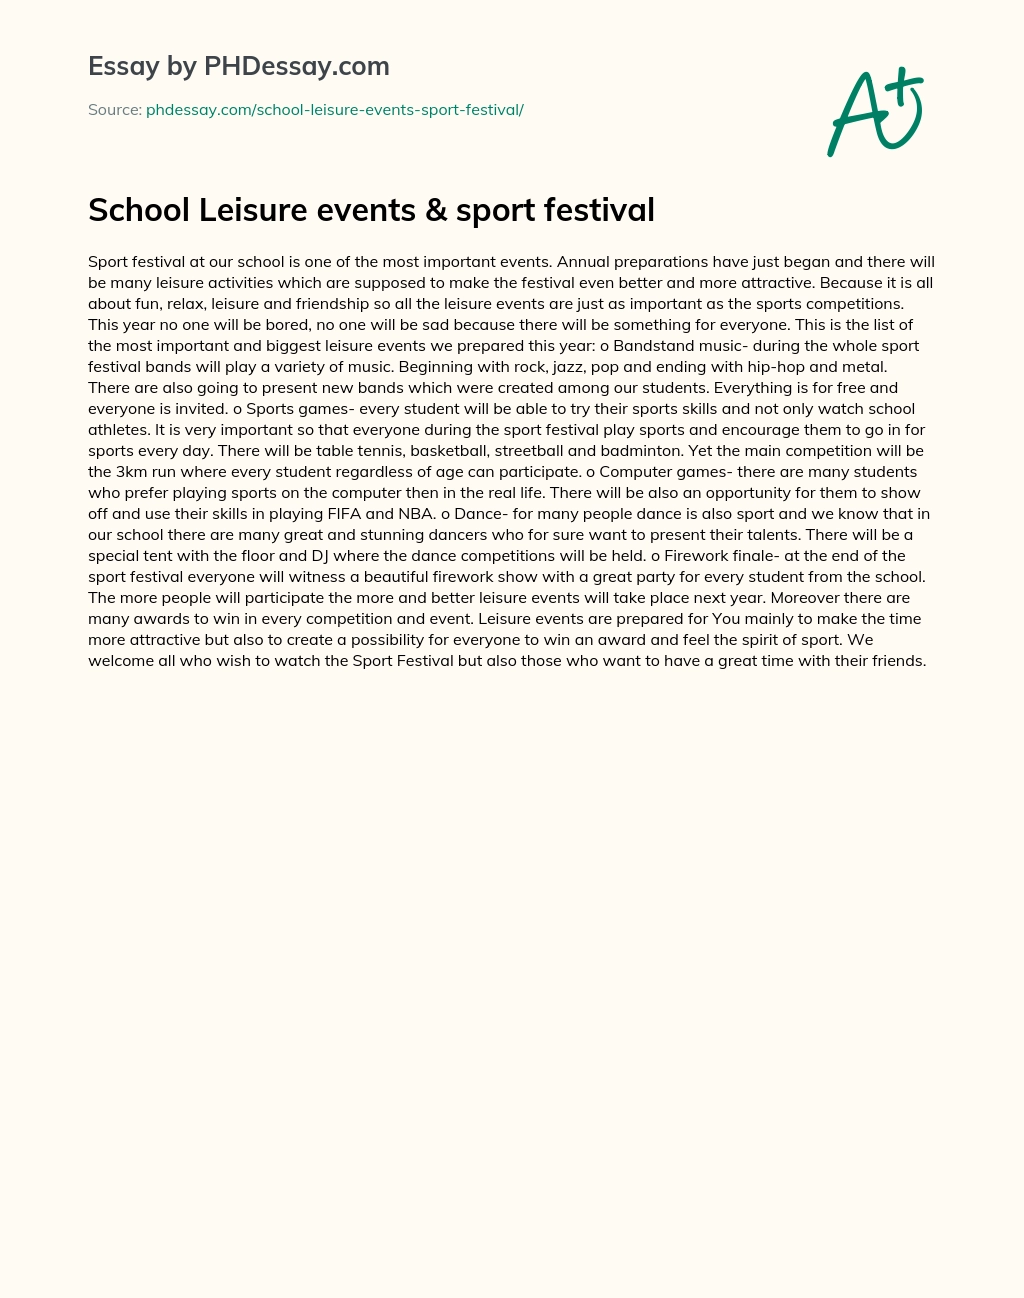 School Leisure events & sport festival essay